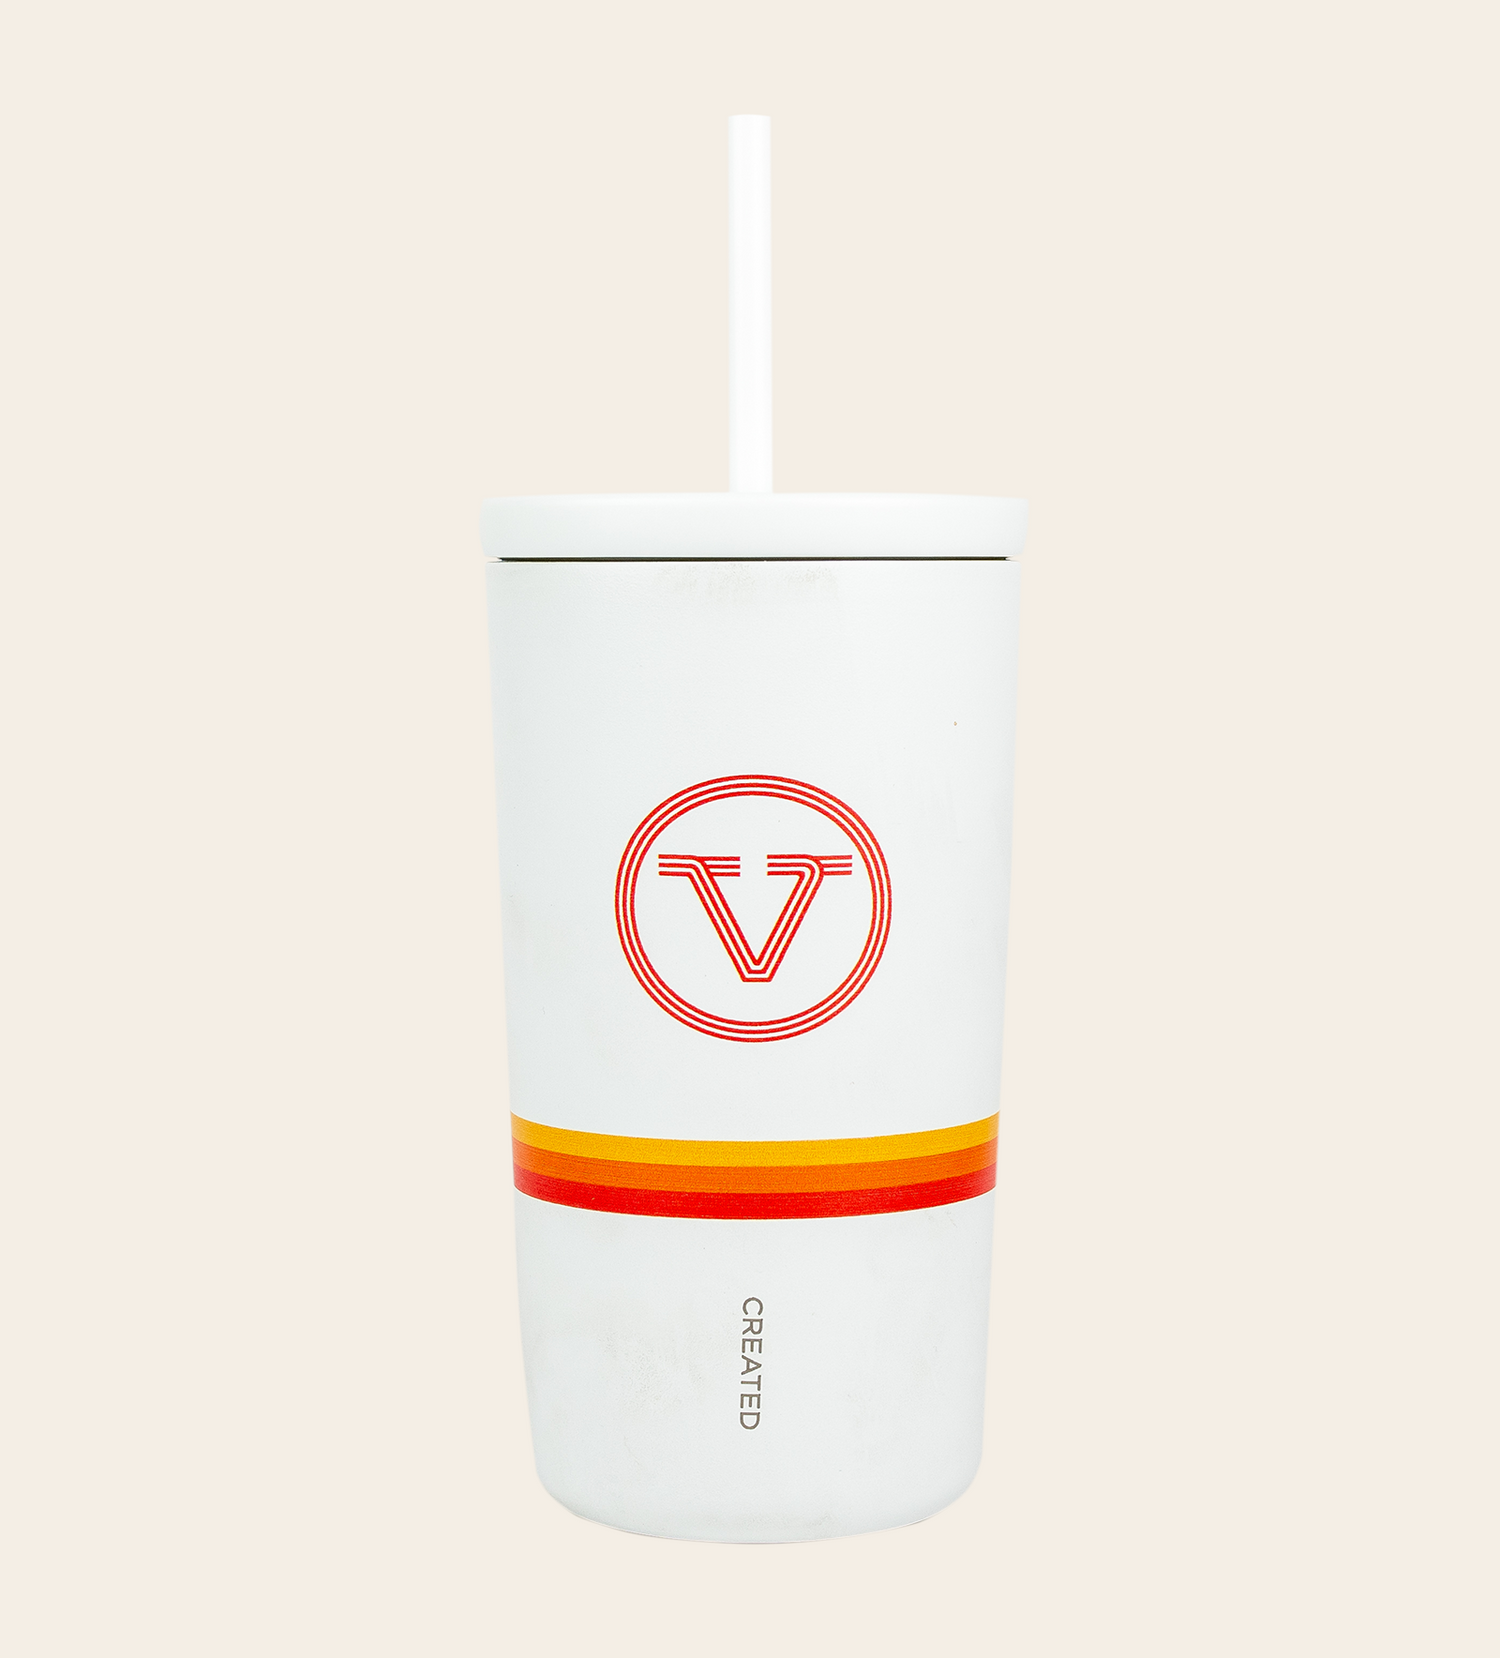 Retro Cold Tumbler back. Verve "V" logo